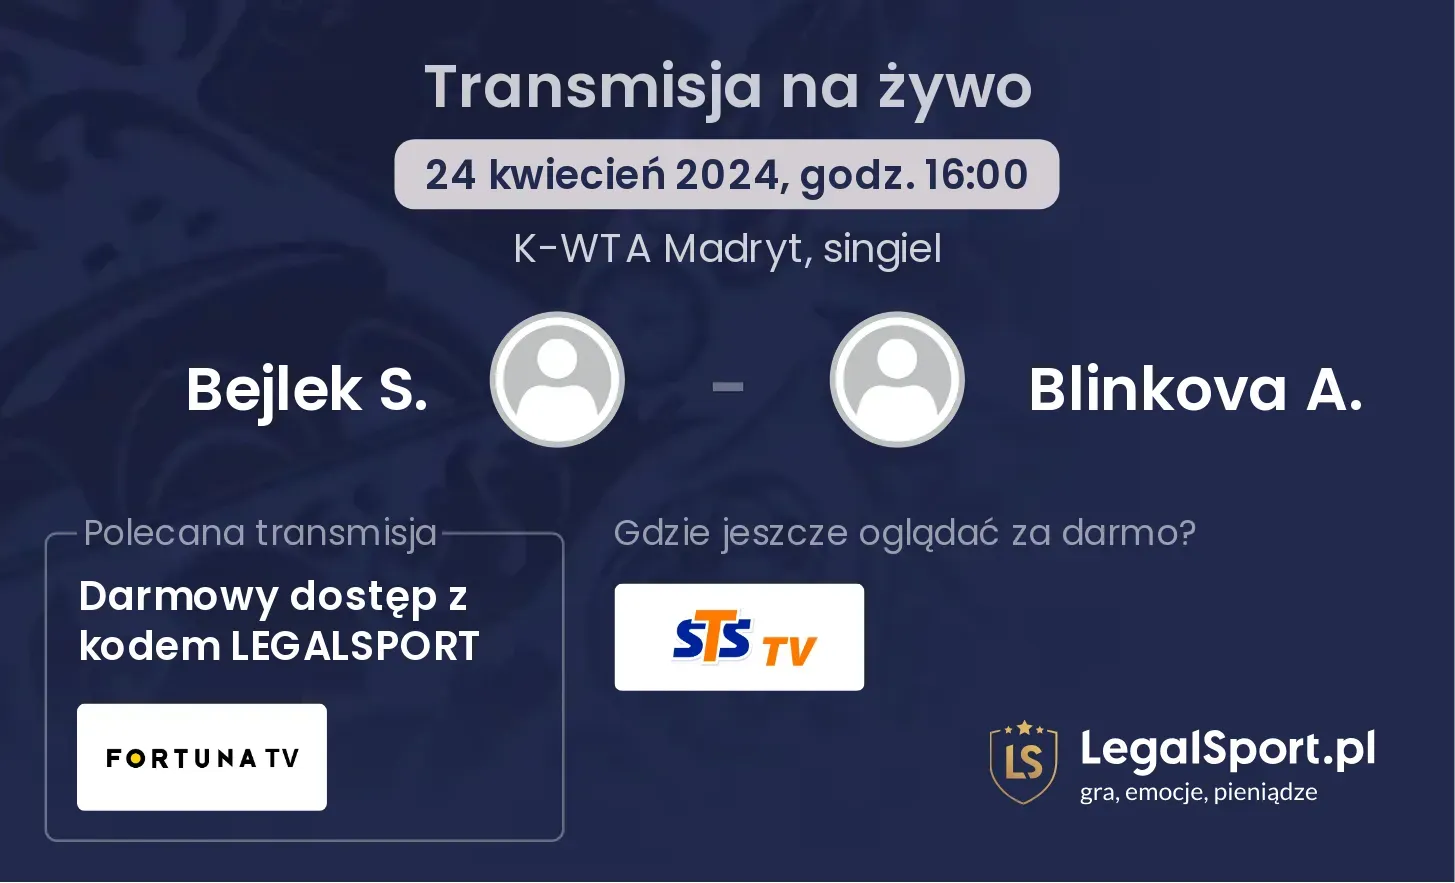 Bejlek S. - Blinkova A. transmisja na żywo